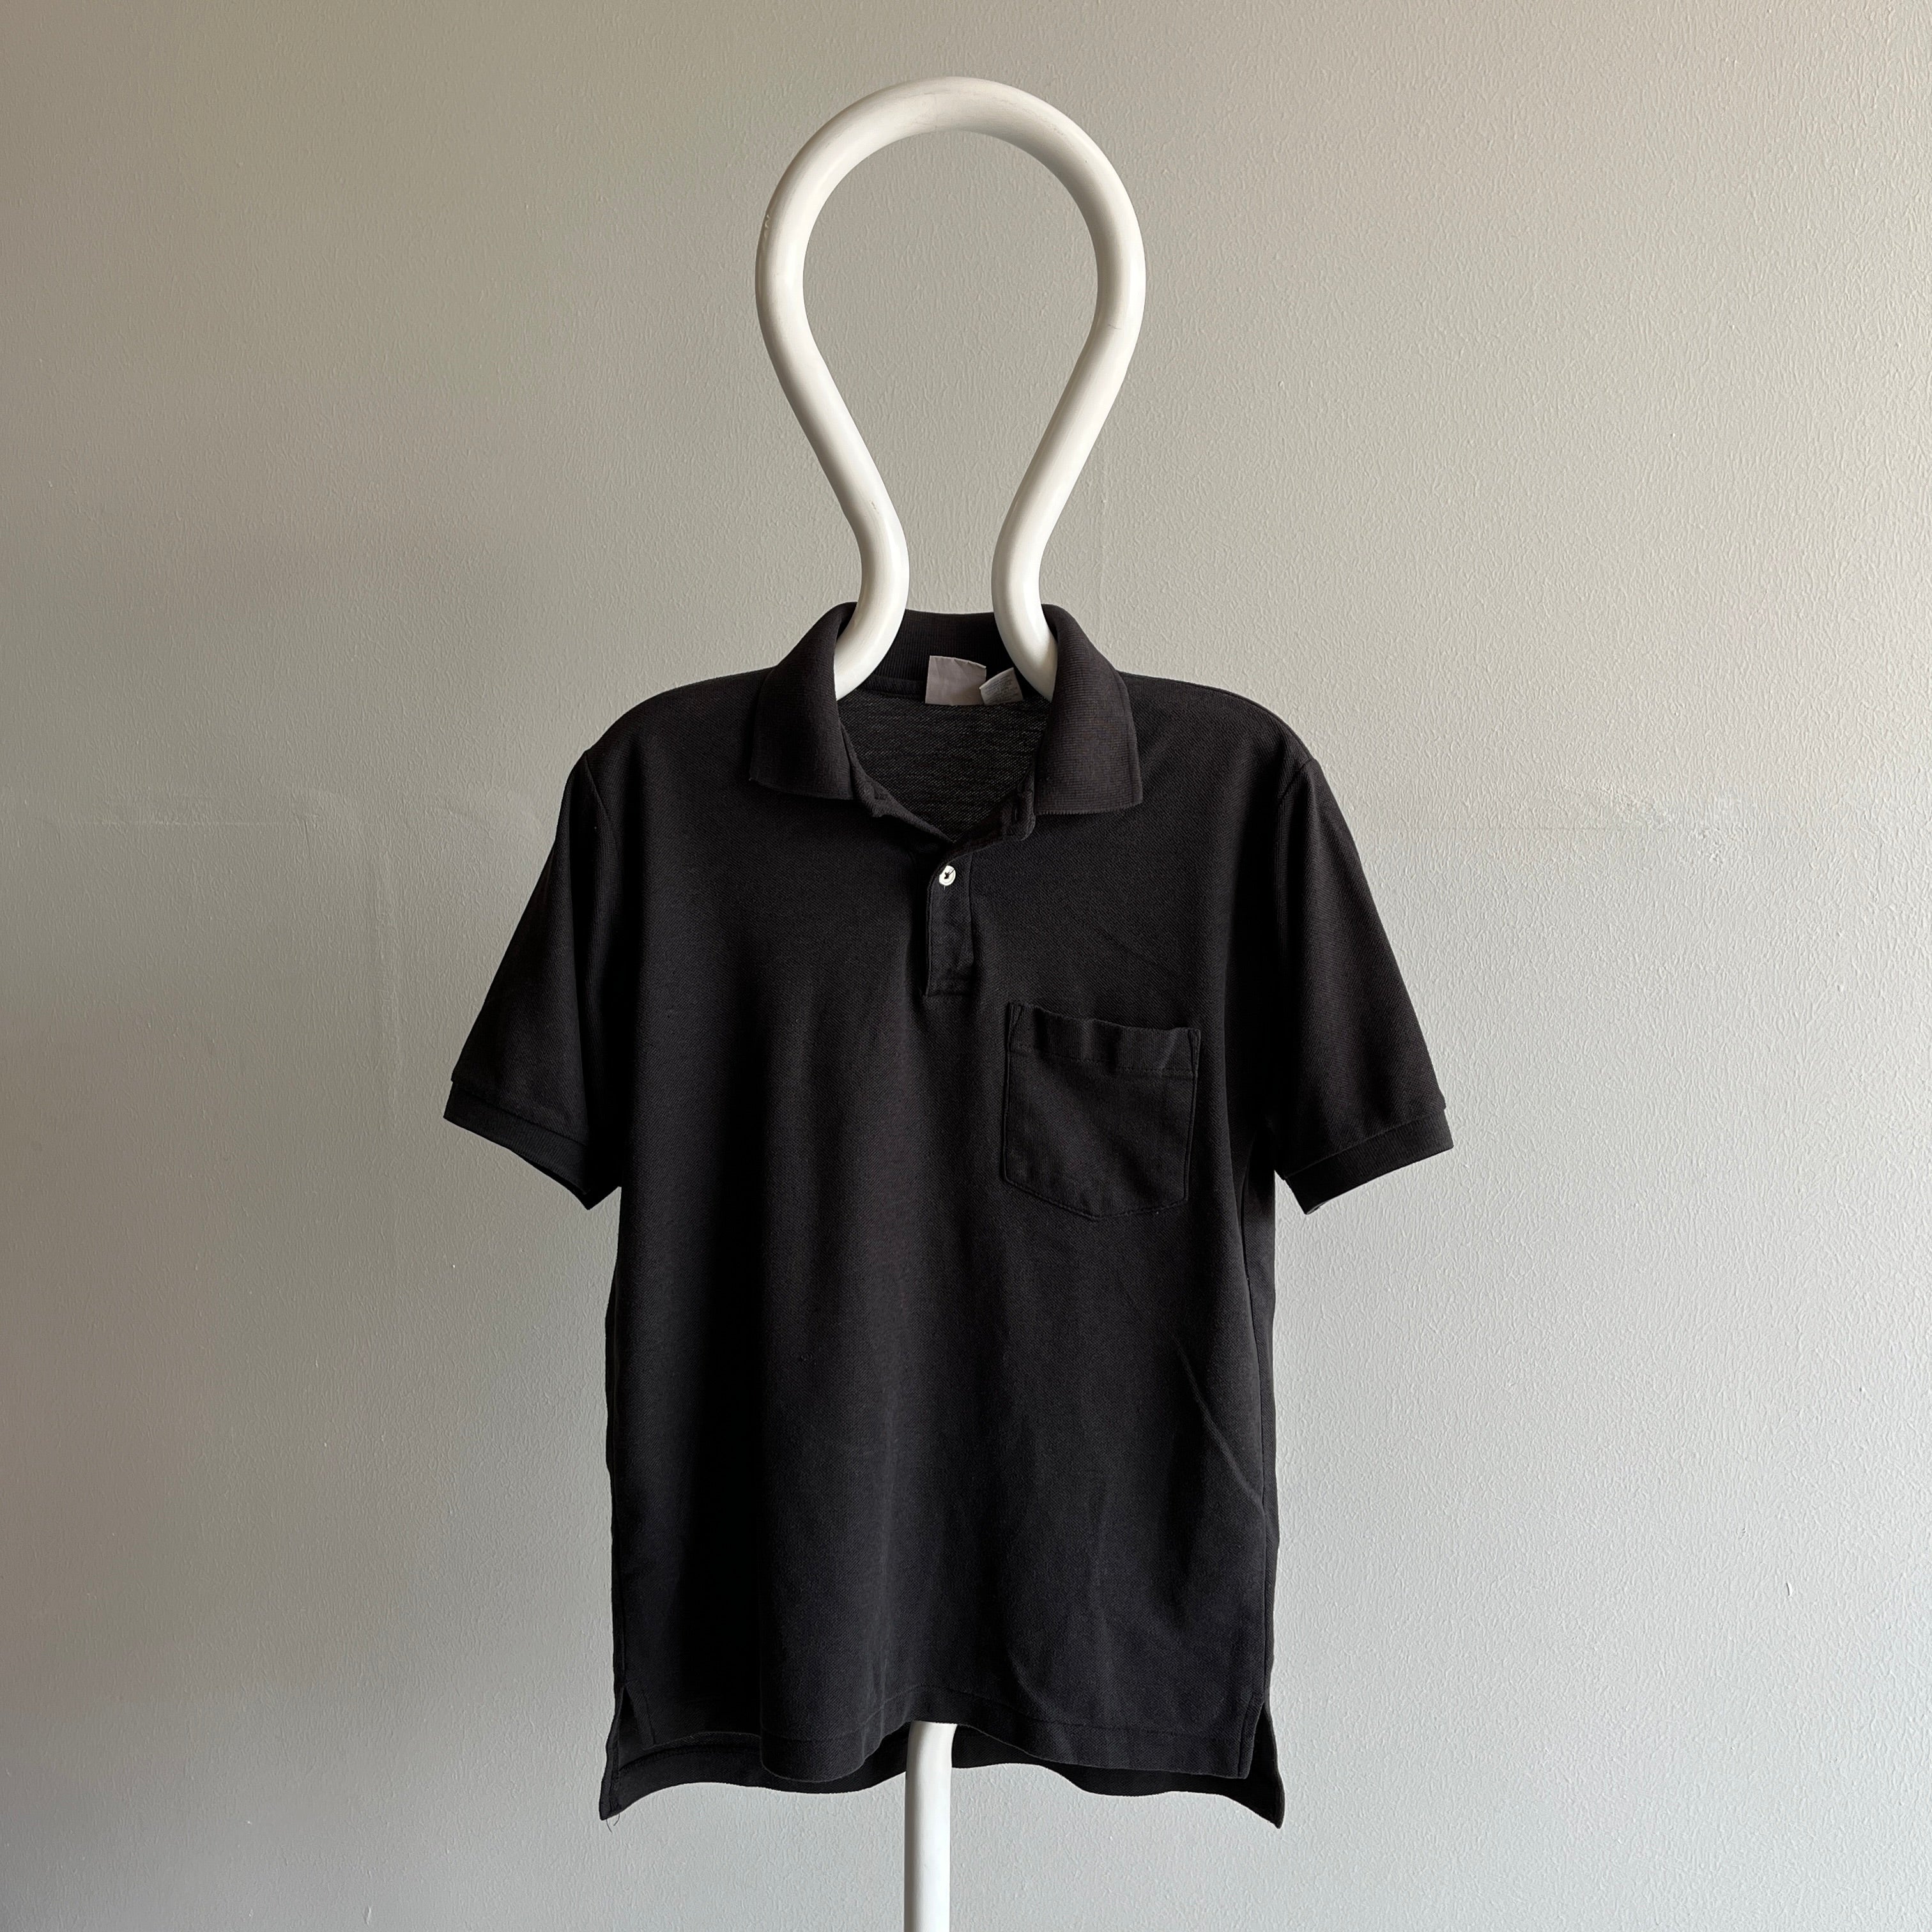 1990s Blank Black Pocket Polo T-Shirt